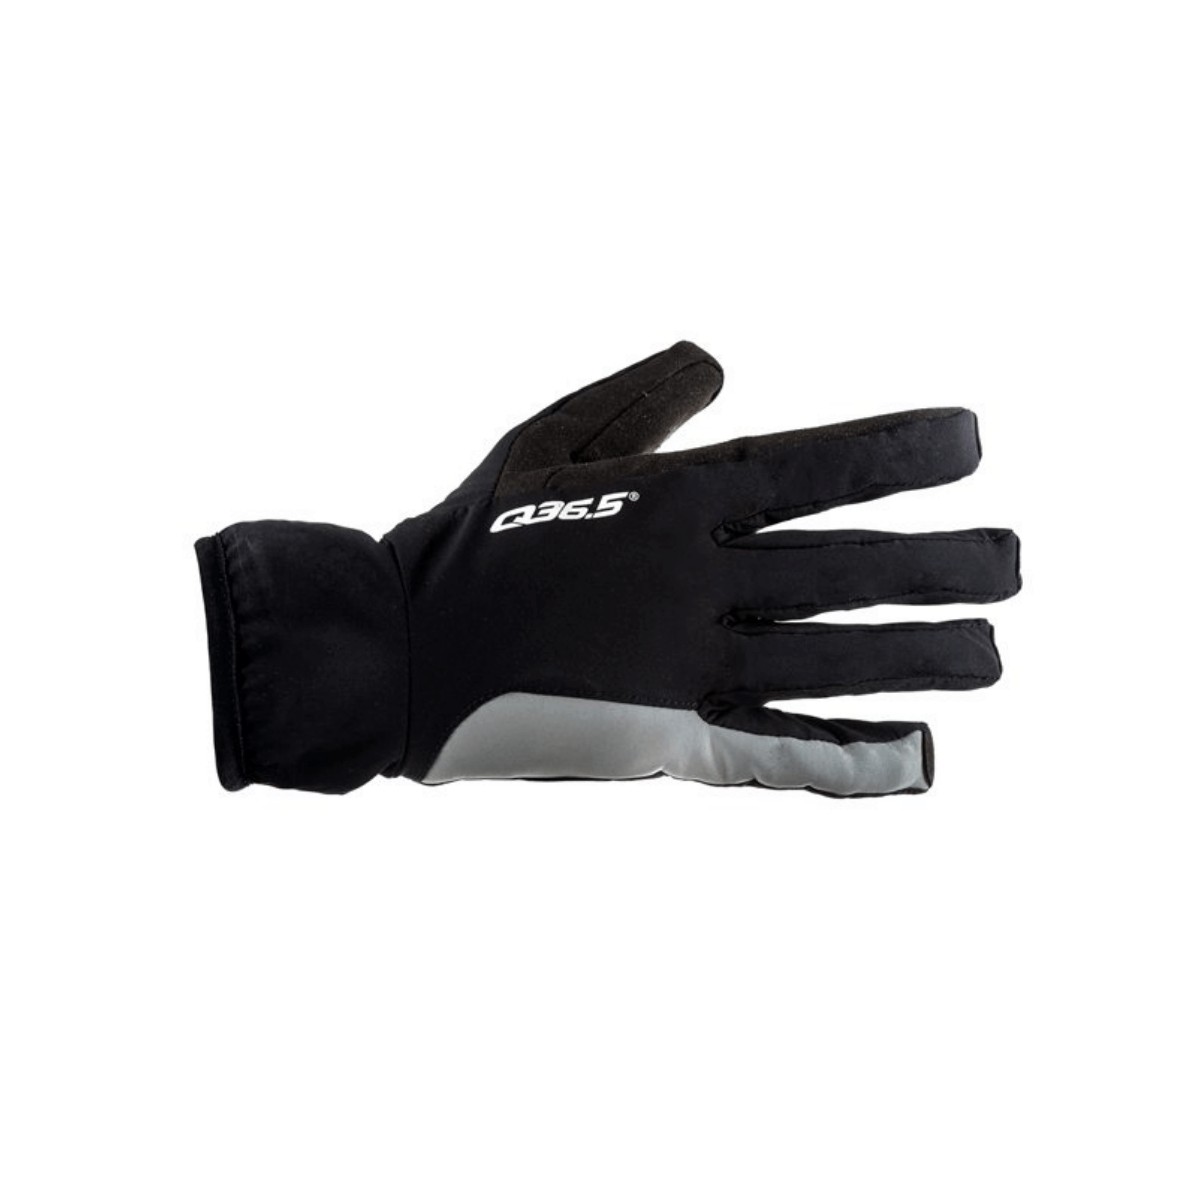 Gloves Q36.5 Be Love 0 Black, Size M